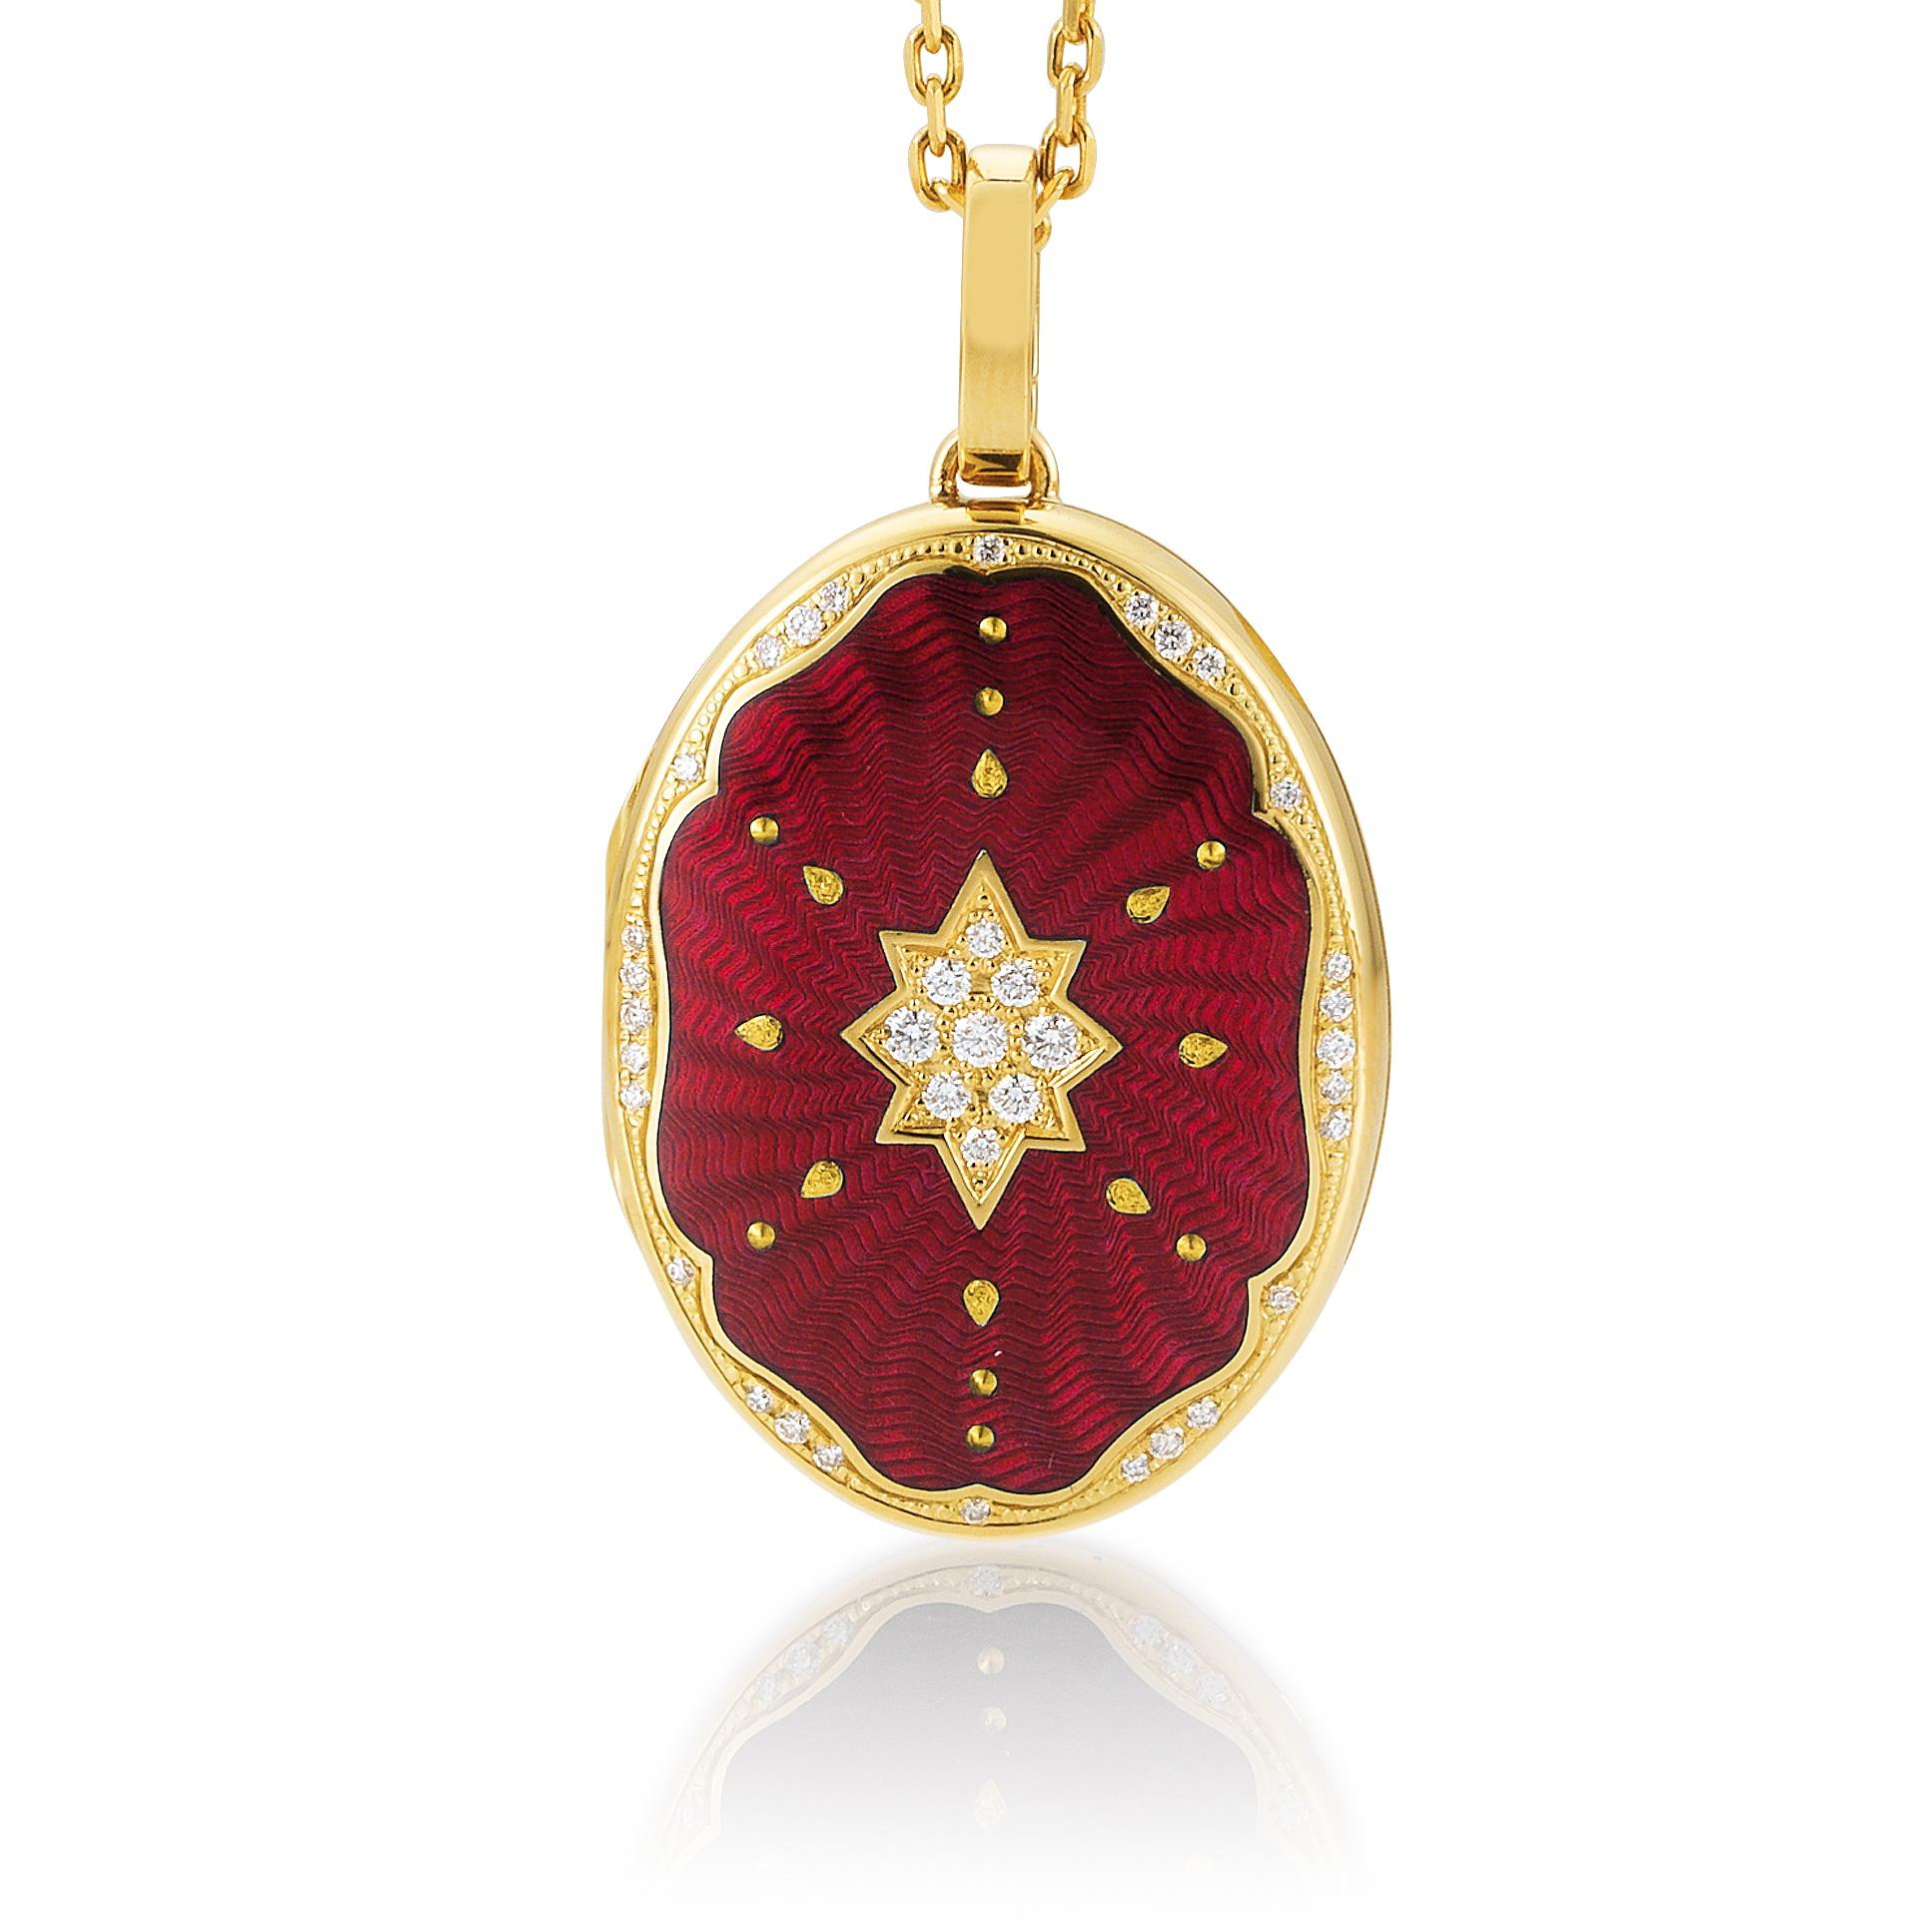 Brilliant Cut Oval Locket Pendant Necklace 18k Yellow Gold Red Enamel 37 Diamonds 0.29 ct G VS For Sale